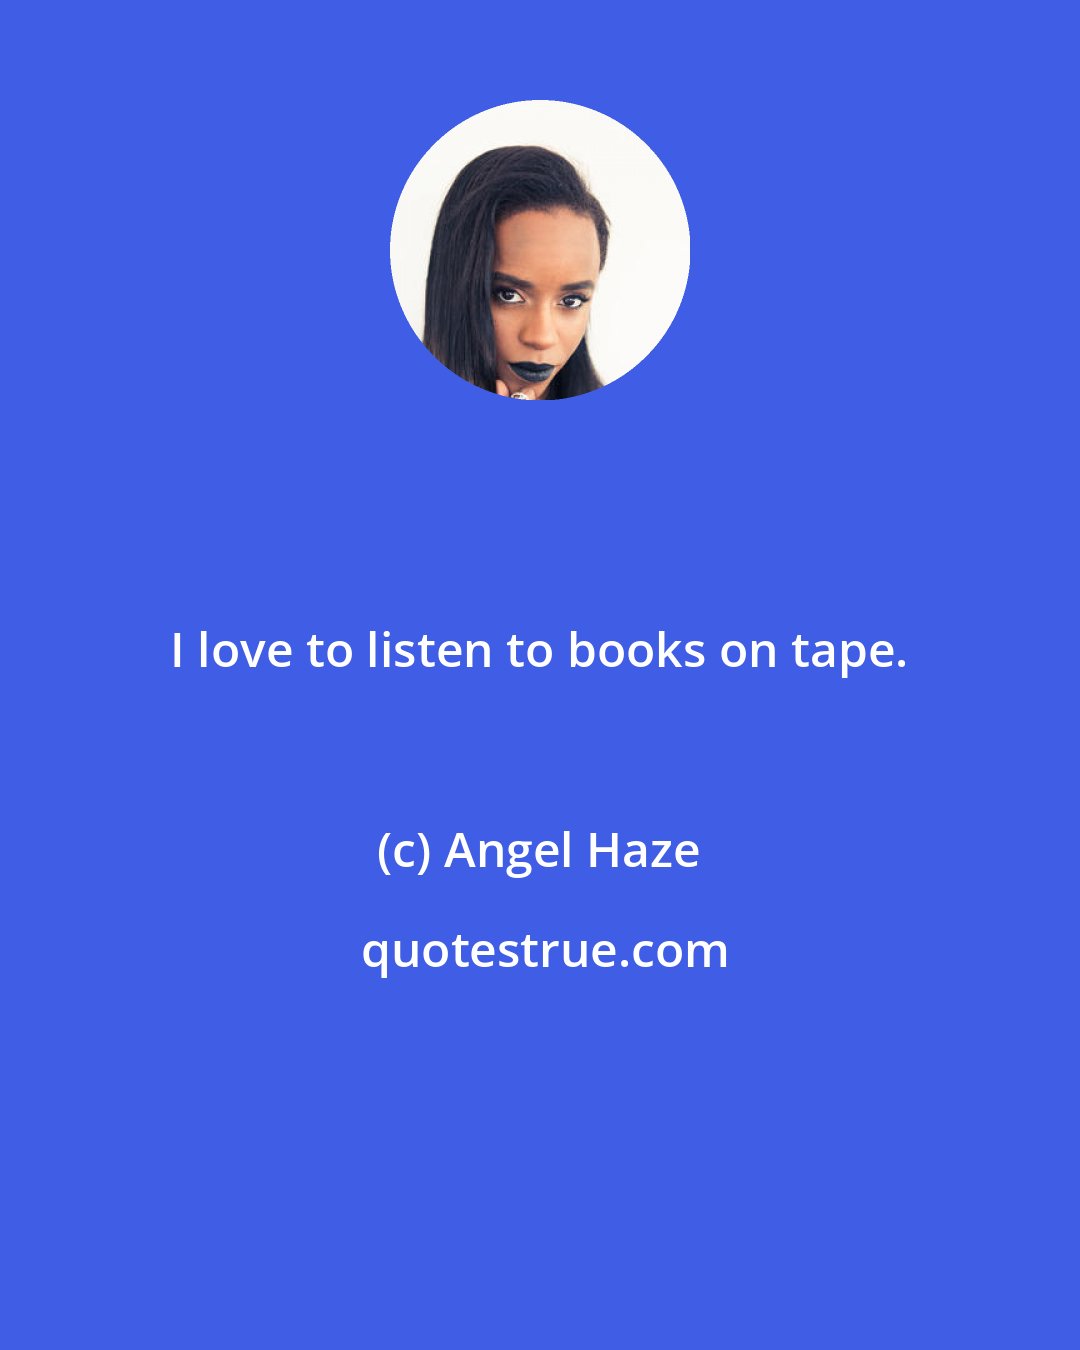 Angel Haze: I love to listen to books on tape.